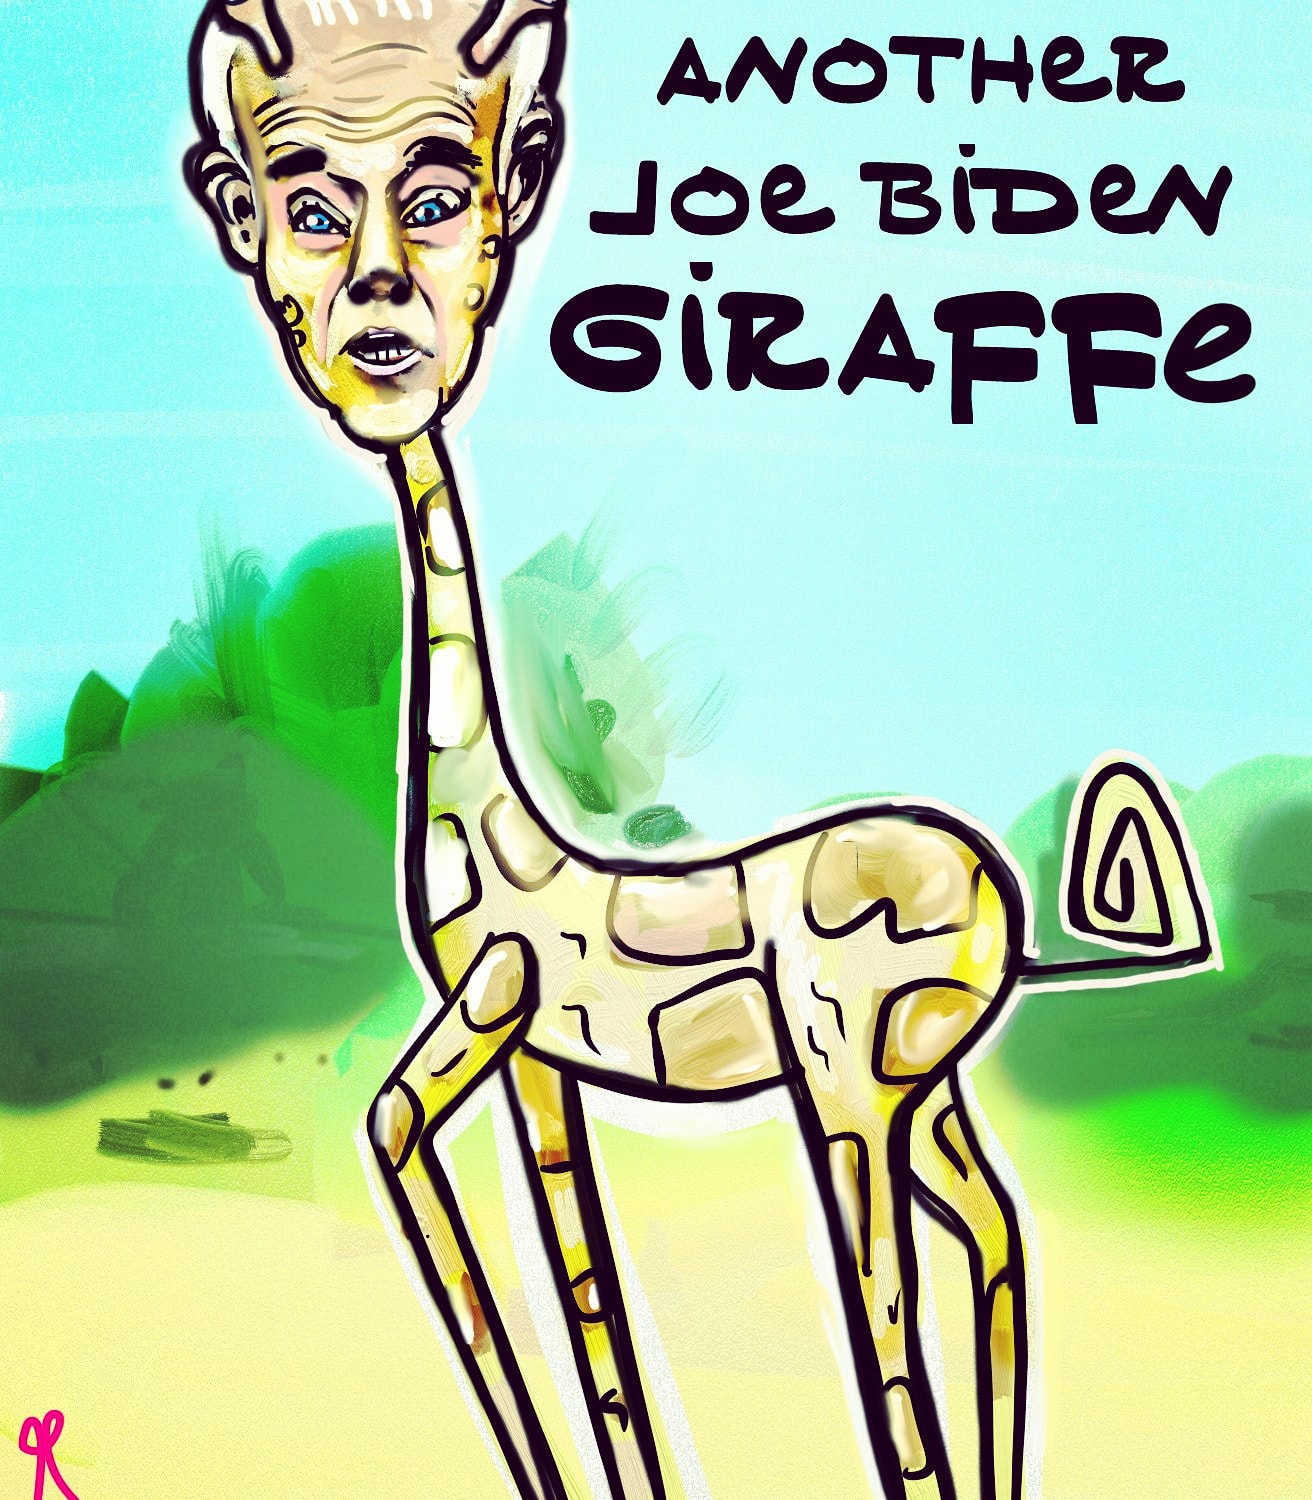 Joe Biden Gaffe Giraffe political cartoon post thumbnail image